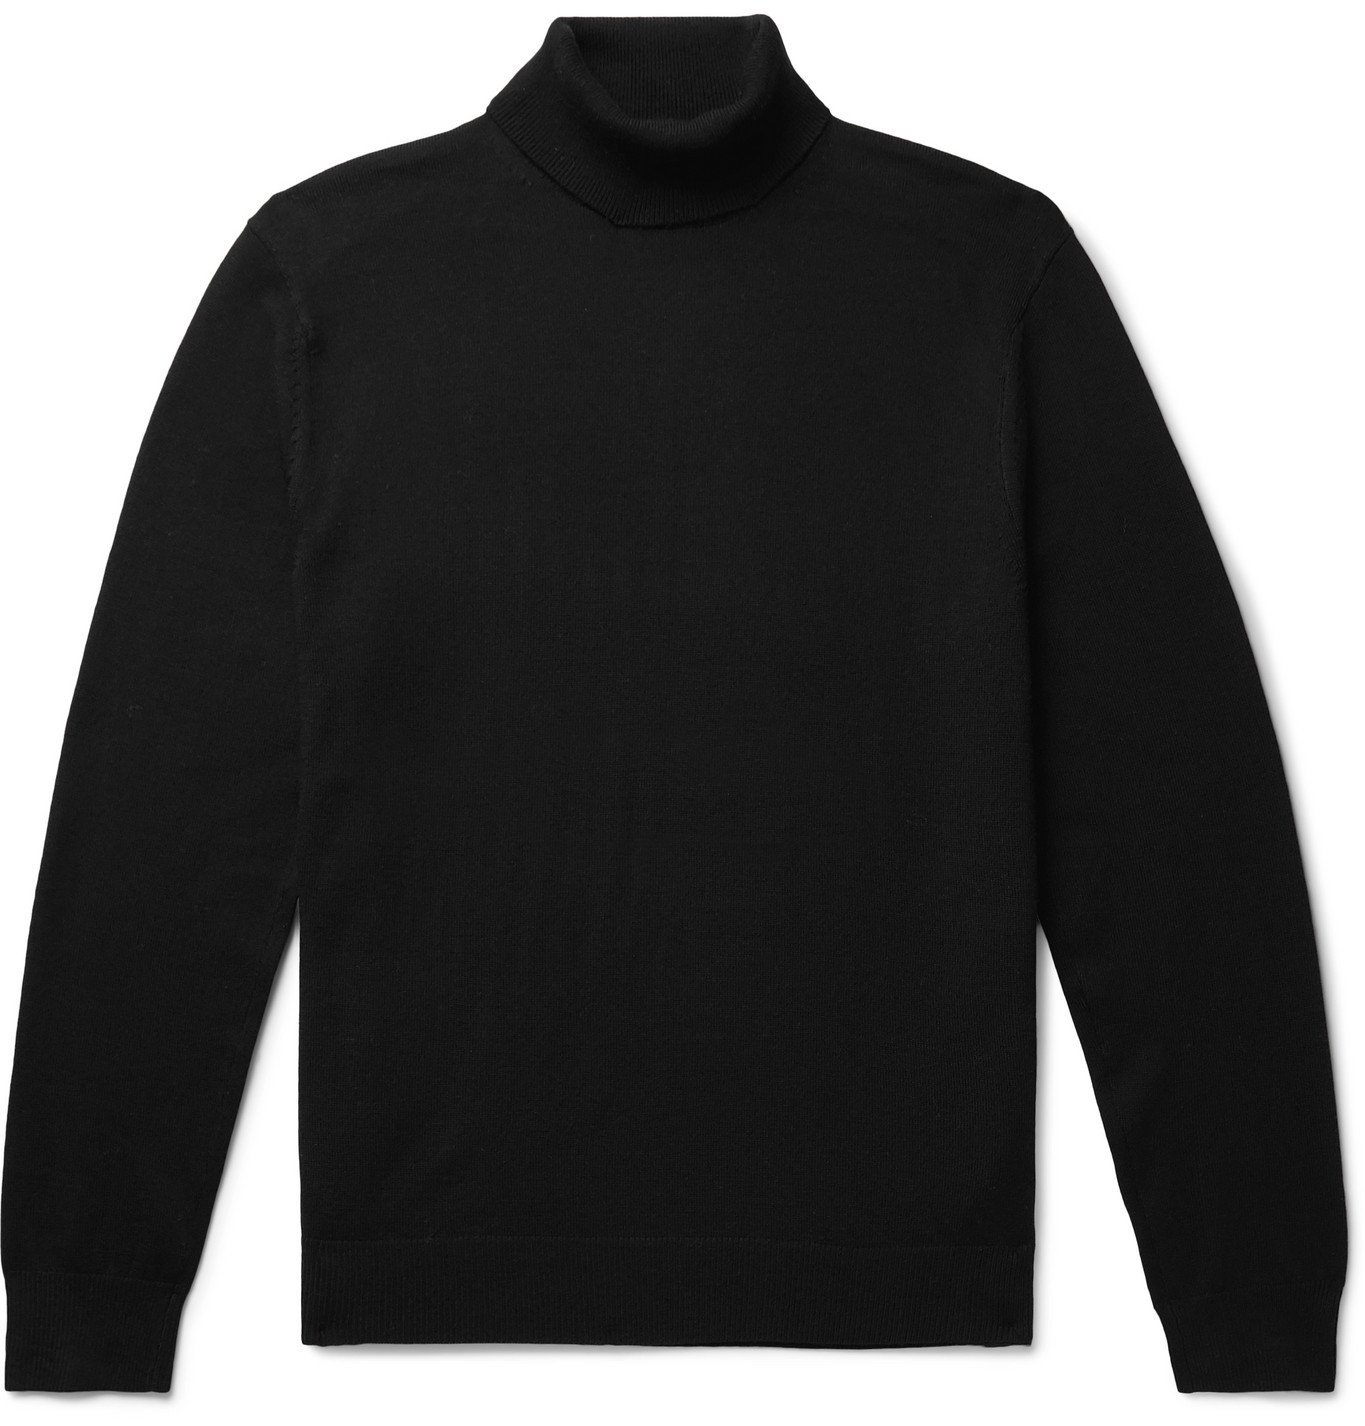 Club Monaco - Piped Wool Rollneck Sweater - Black Club Monaco